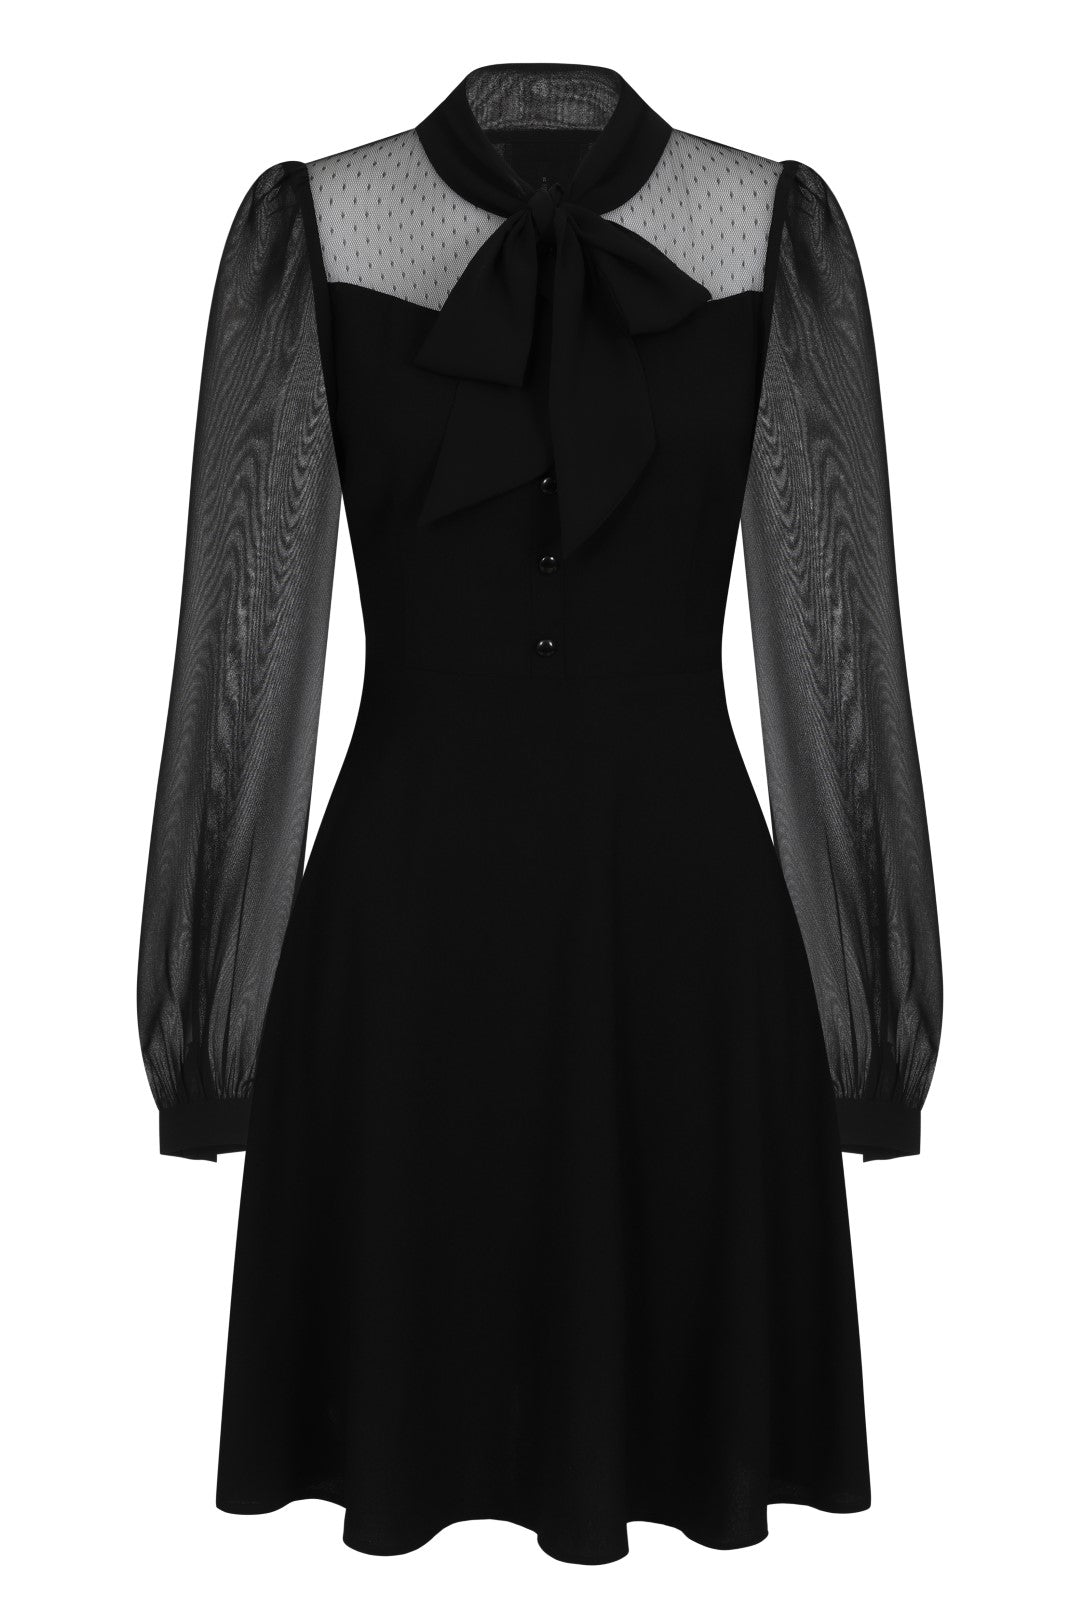 Darcia Black Mid Dress by Hell Bunny